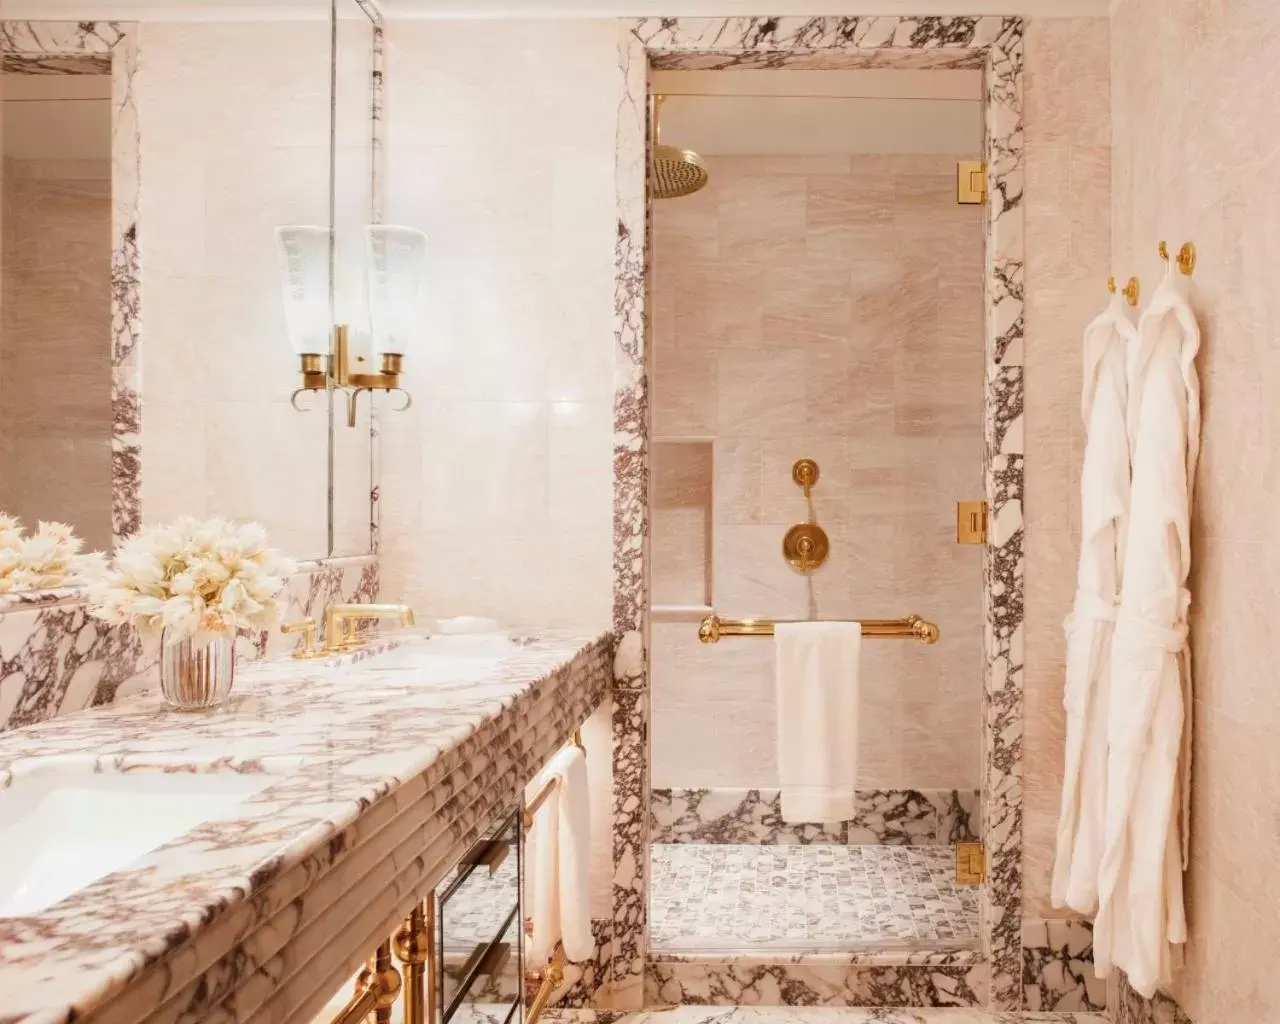 Bathroom in Hotel Barrière Fouquet's New York